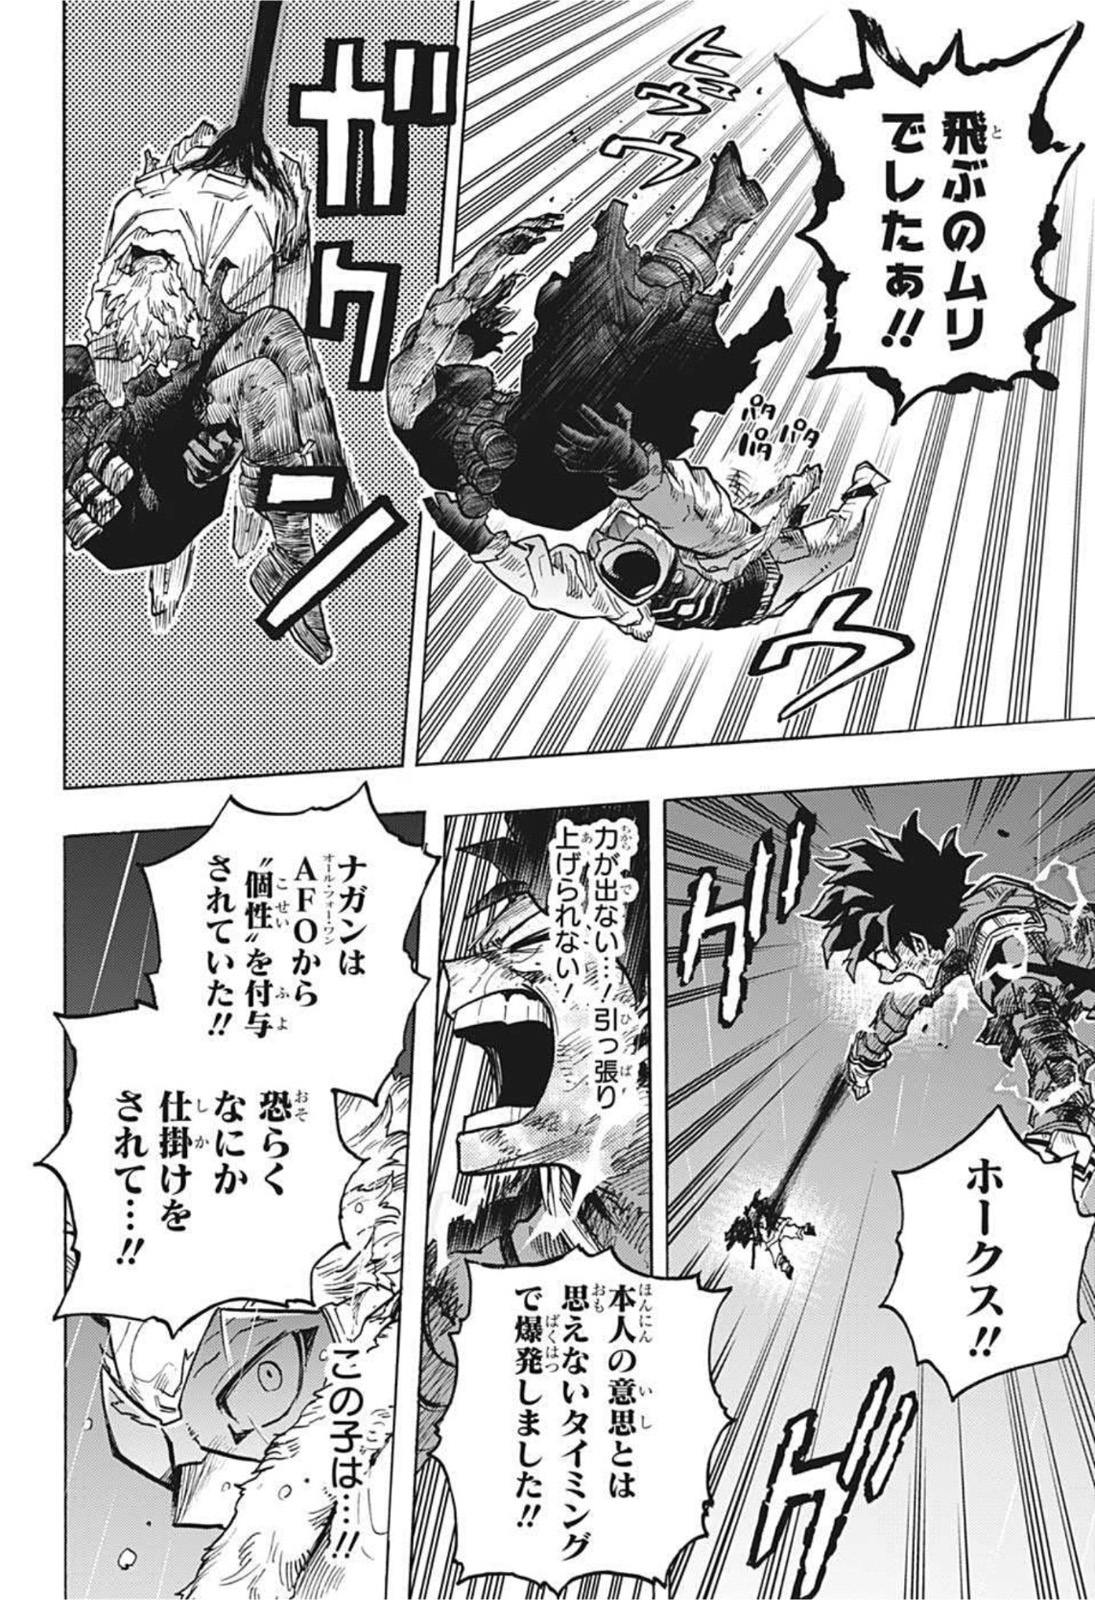 Boku no Hero Academia - Chapter 316 - Page 2